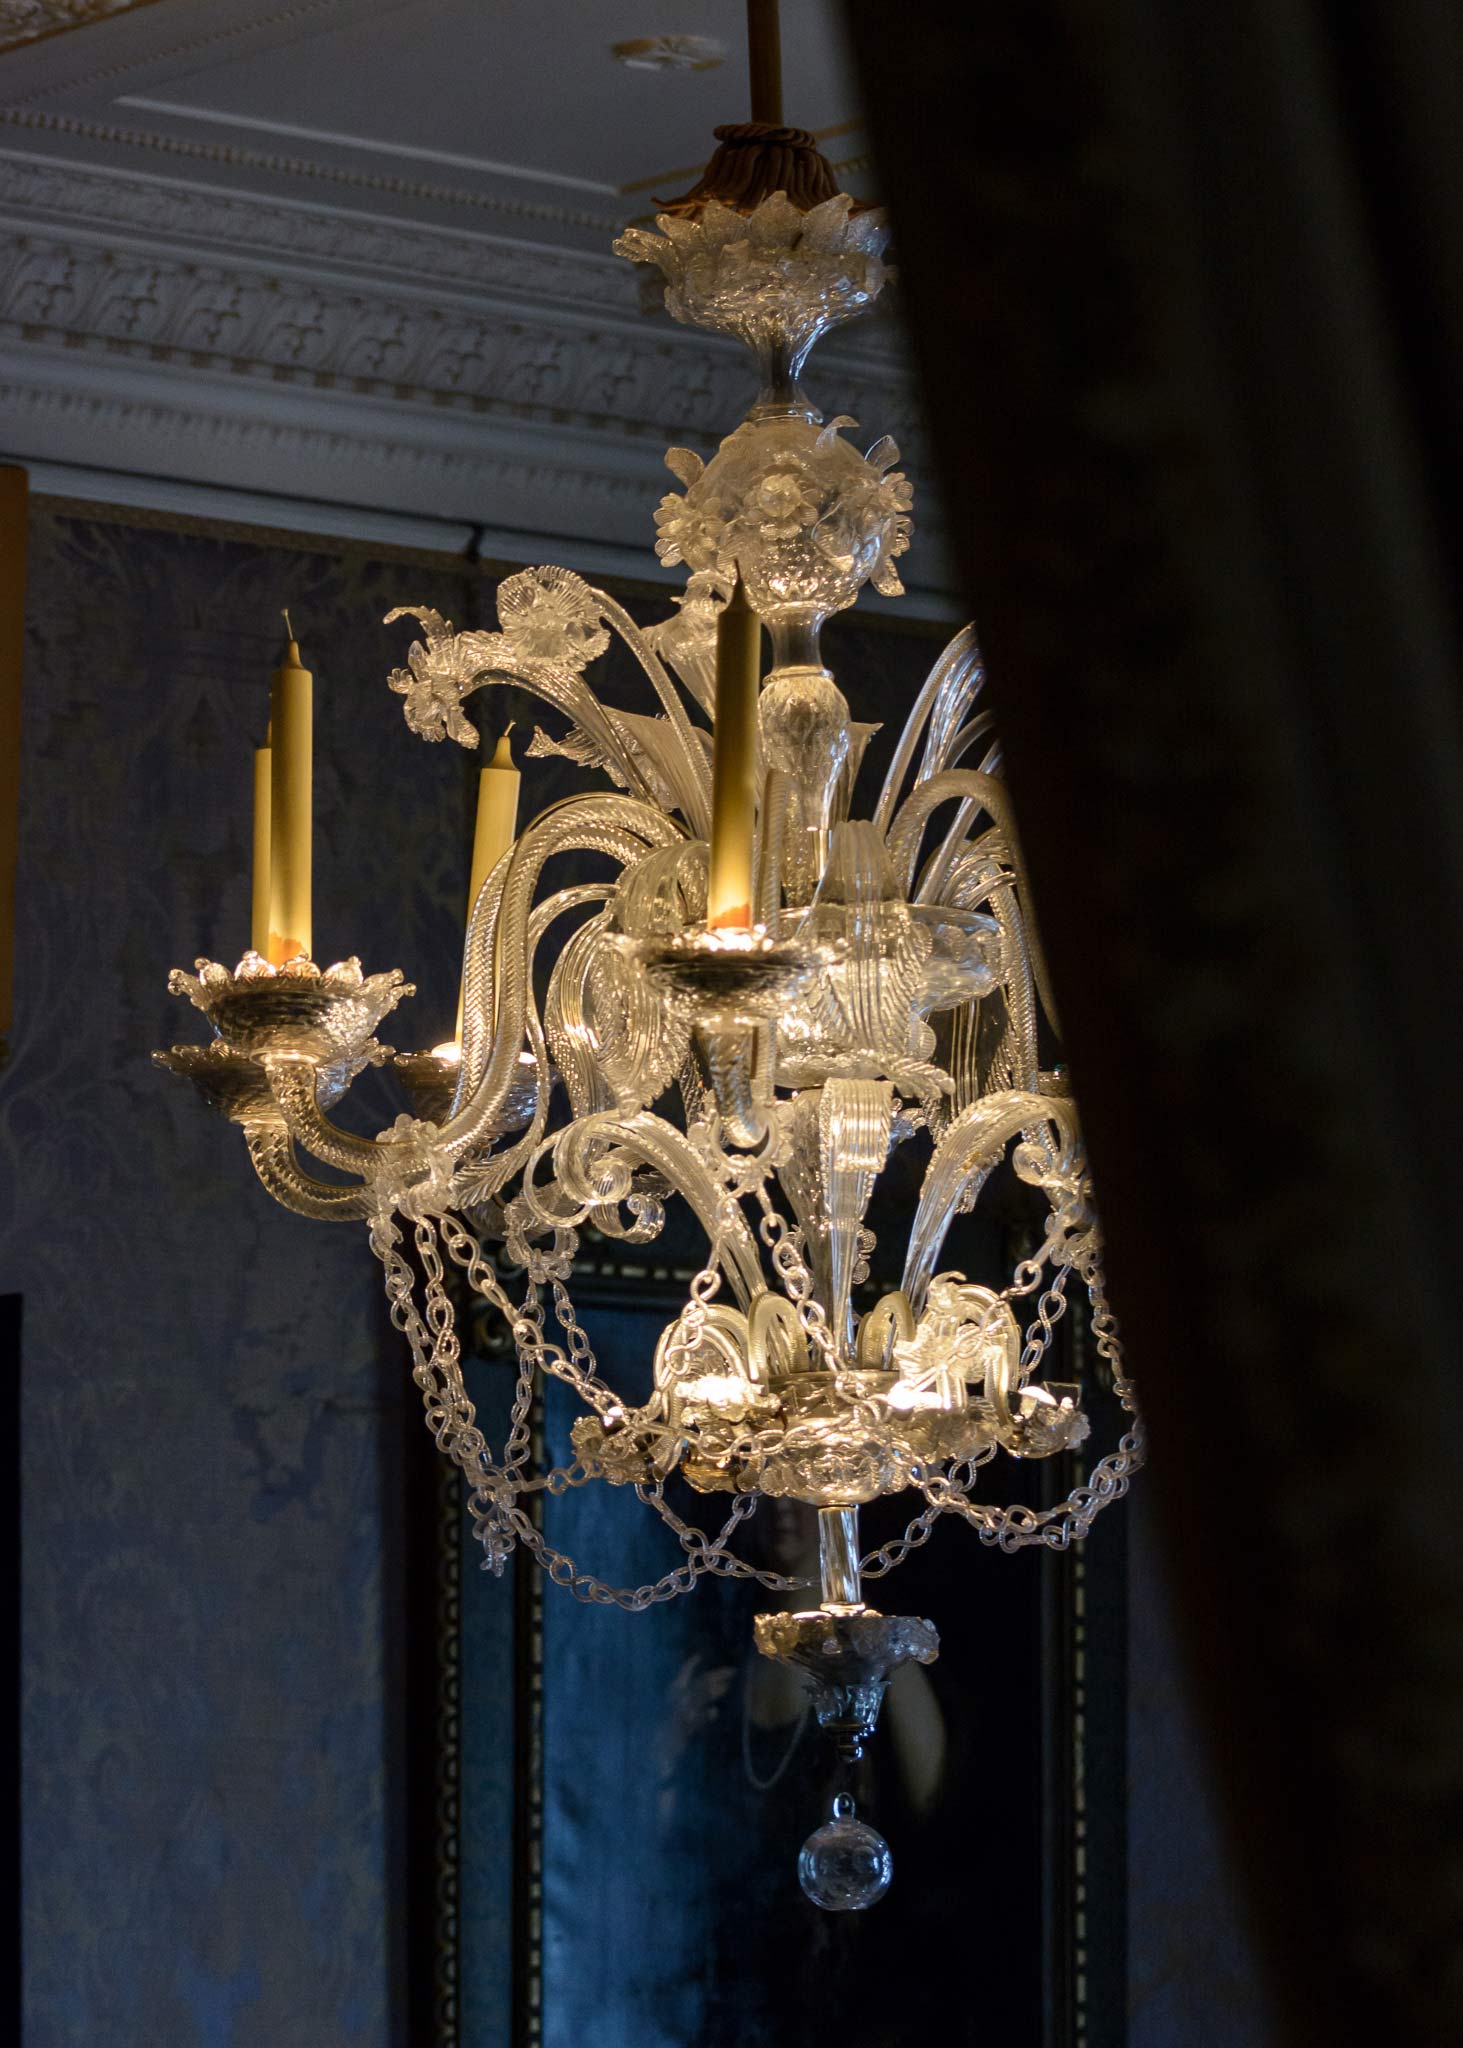 An antique chandelier